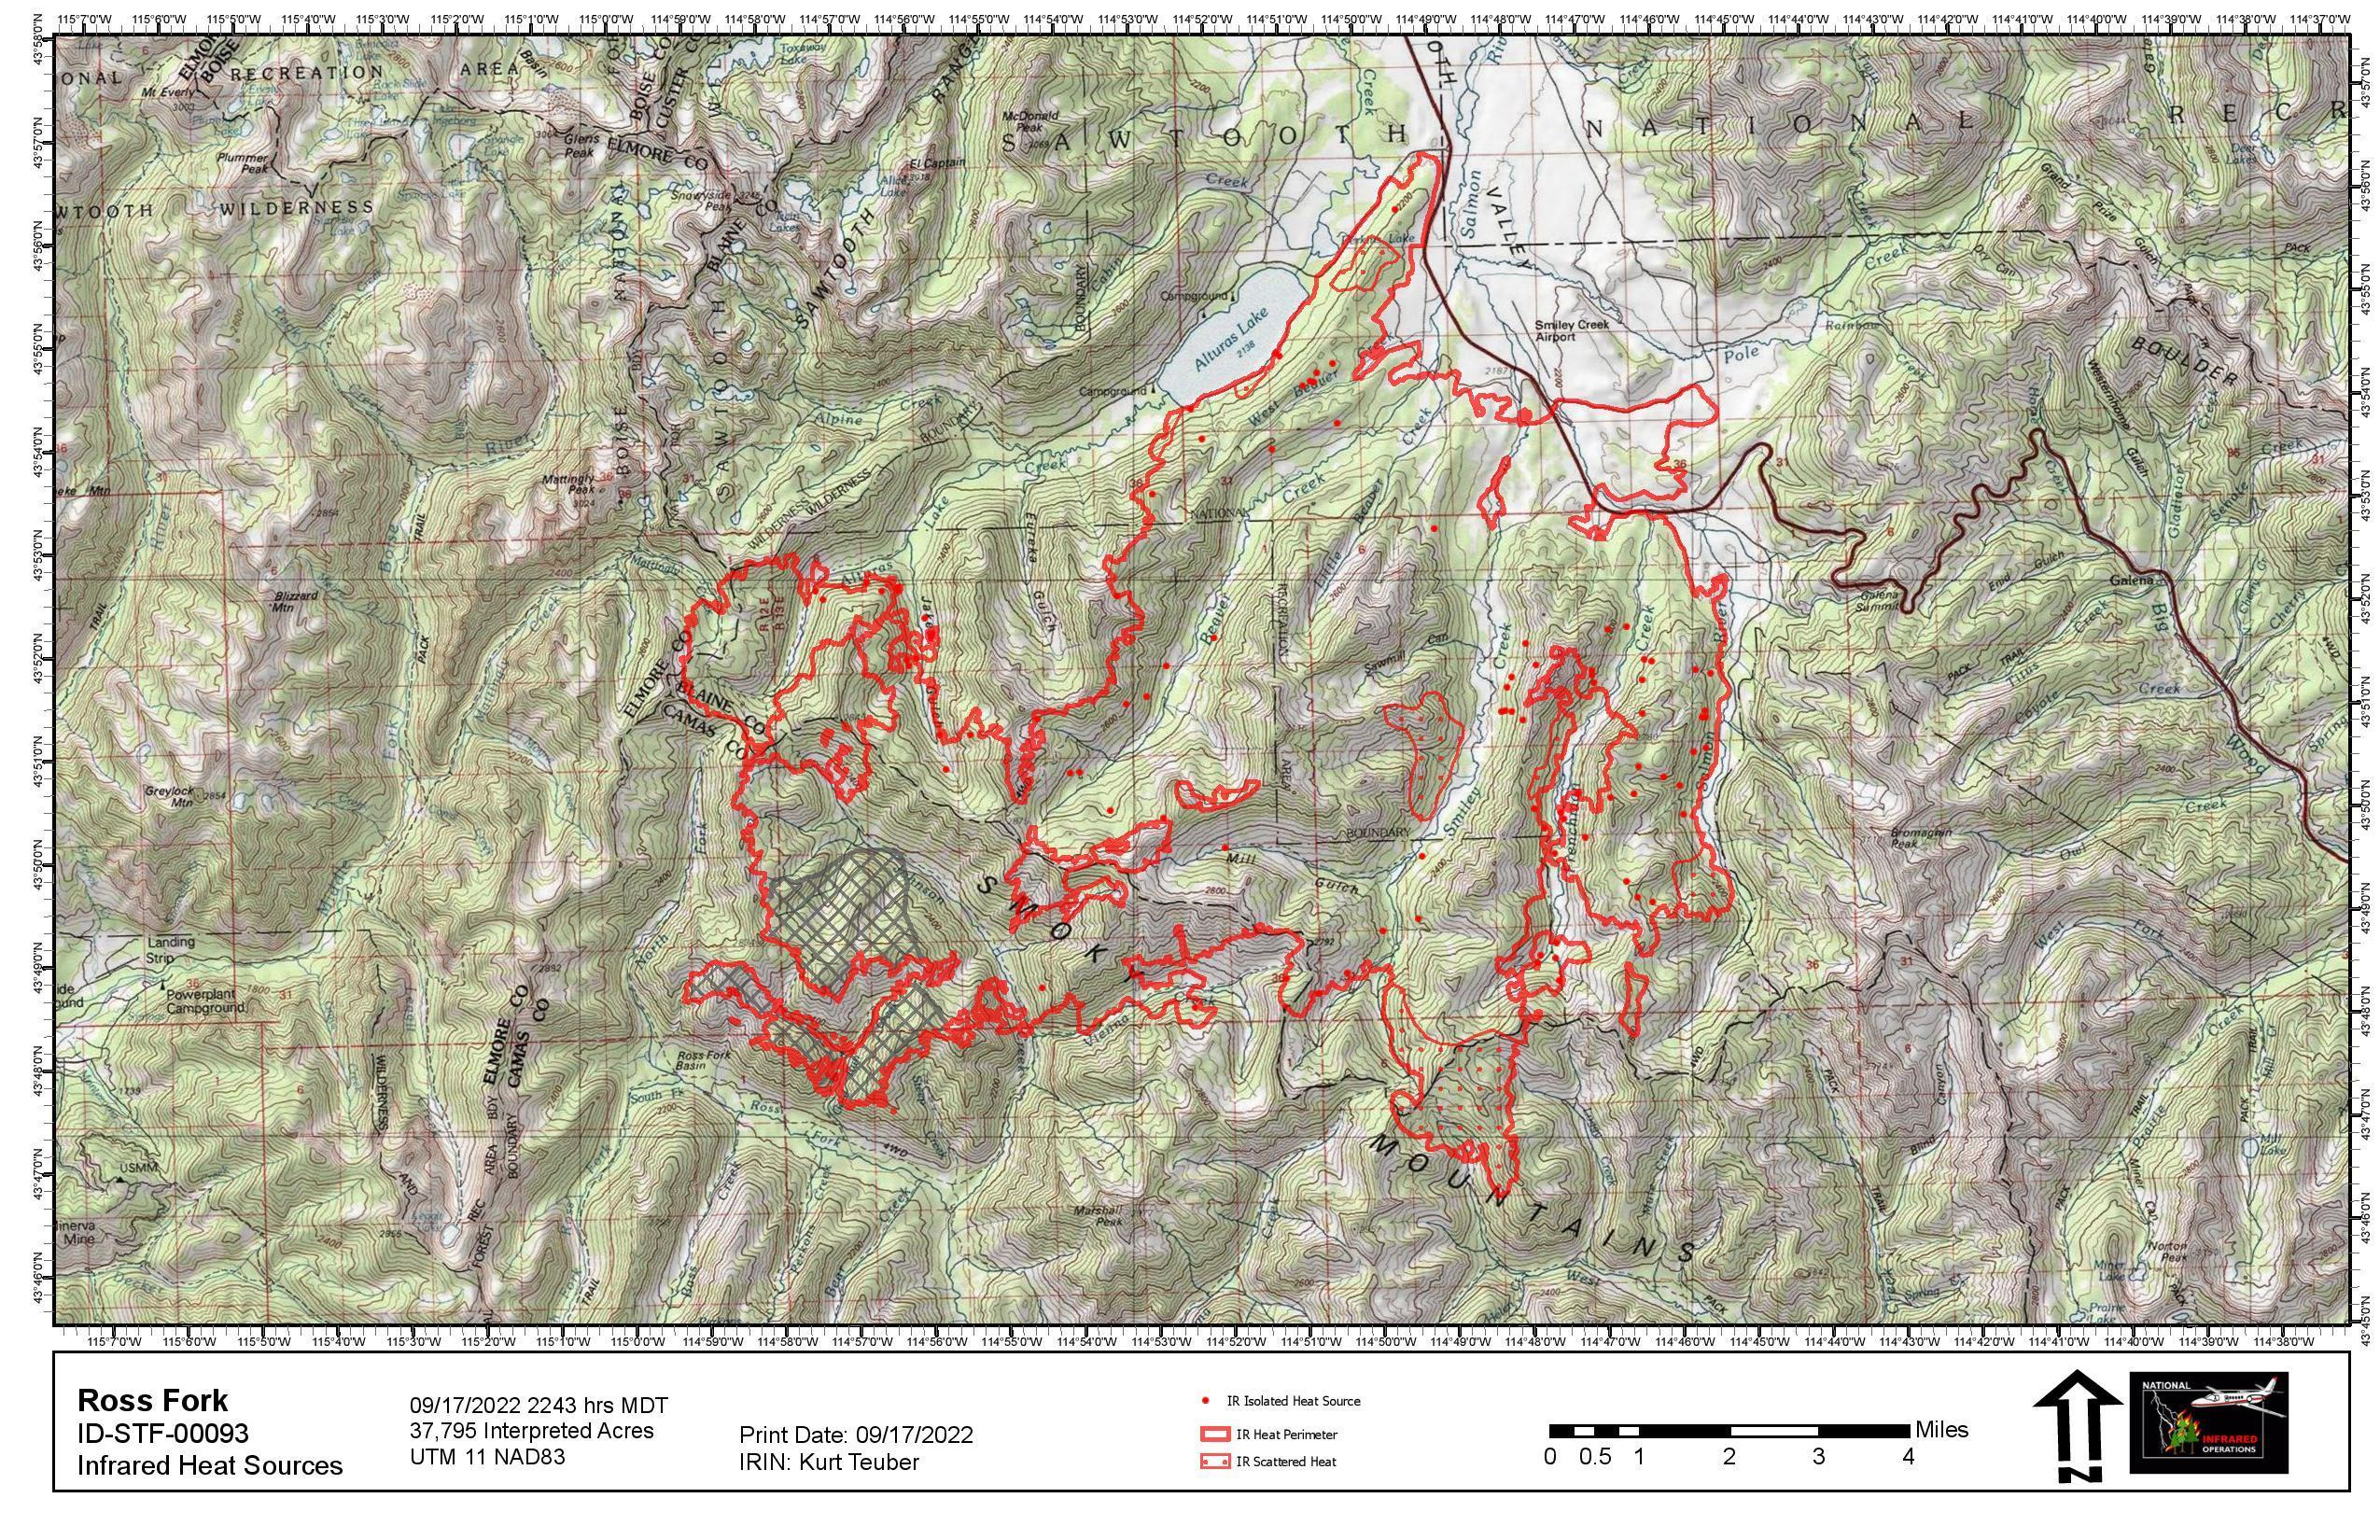 Ross Fork Fire perimeter map, Sunday, 9/18